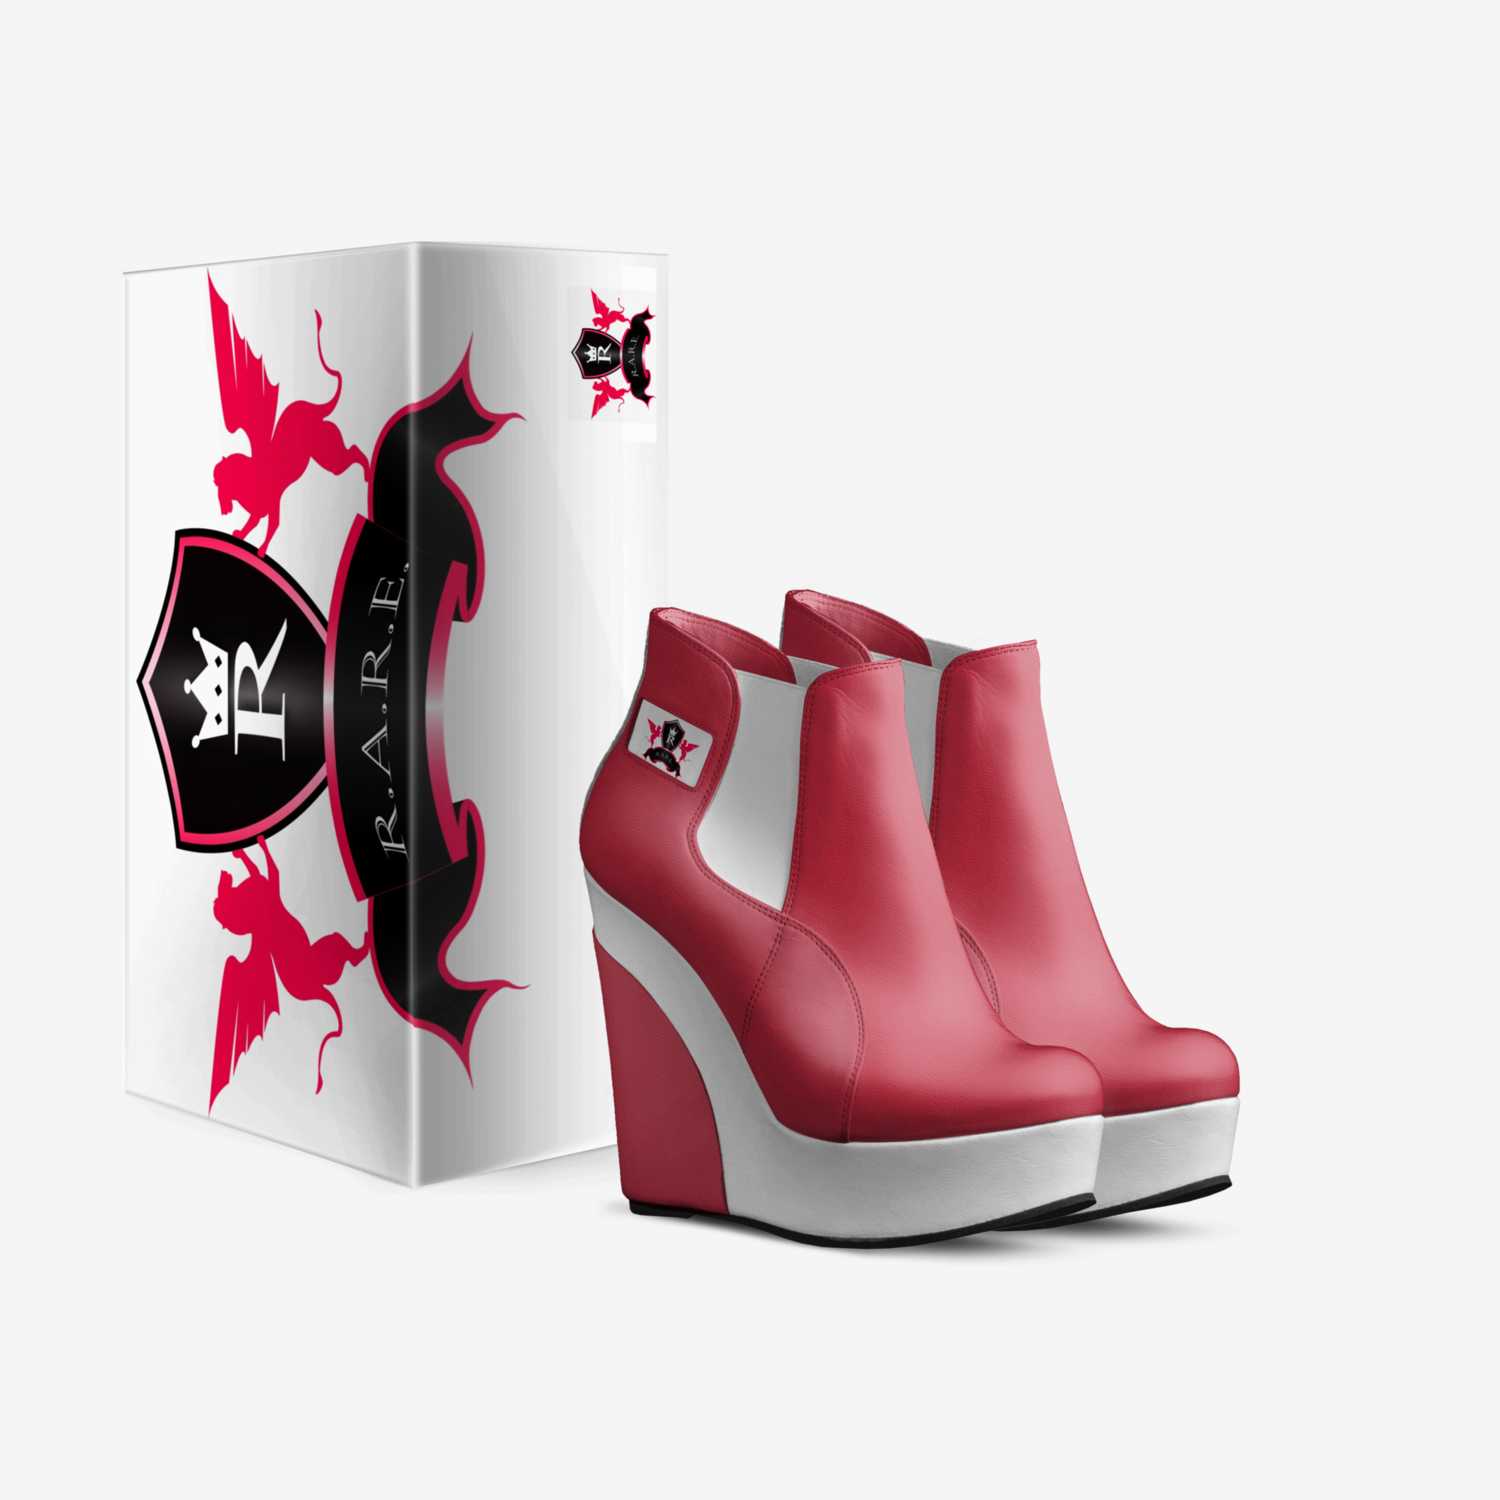 BLAST WOMEN custom made in Italy shoes by John A. Annan | Box view